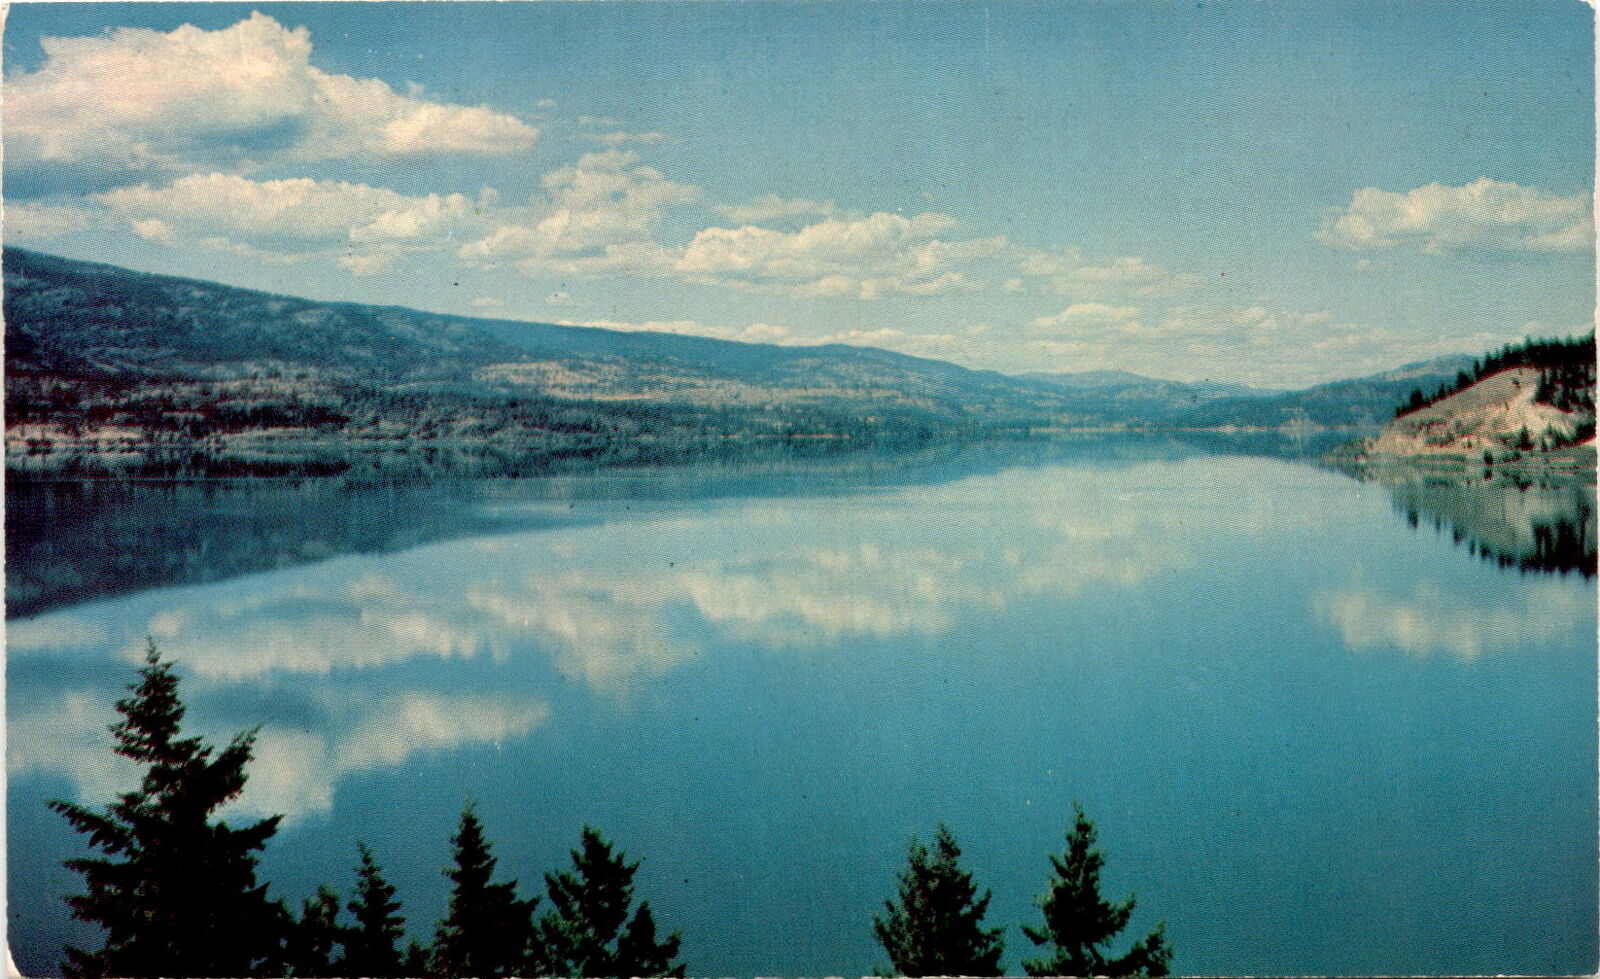 Lake Roosevelt, Grand Coulee Dam, Canadian border, Marcus, Washington. Postcard